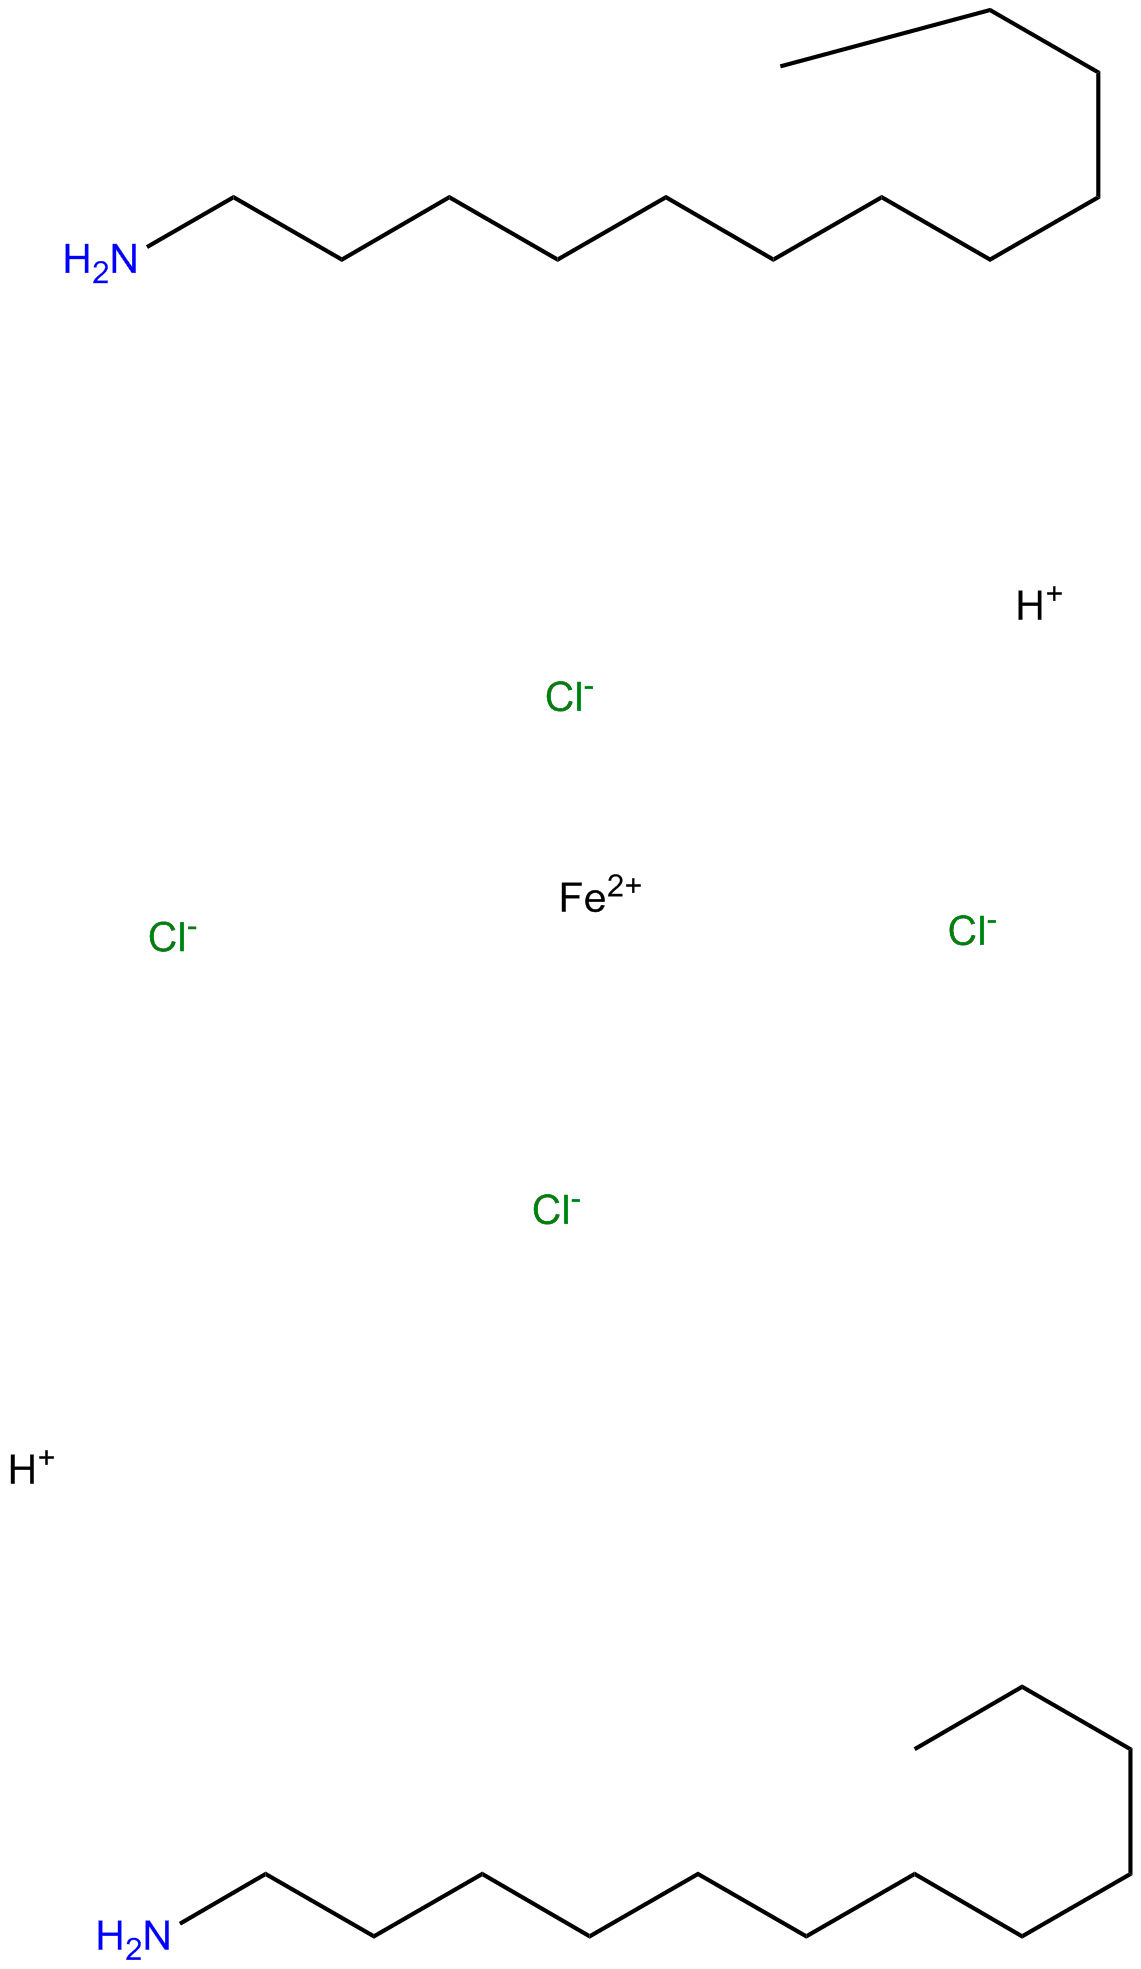 Image of bis(dodecylammonium) tetrachloroferrate(II)